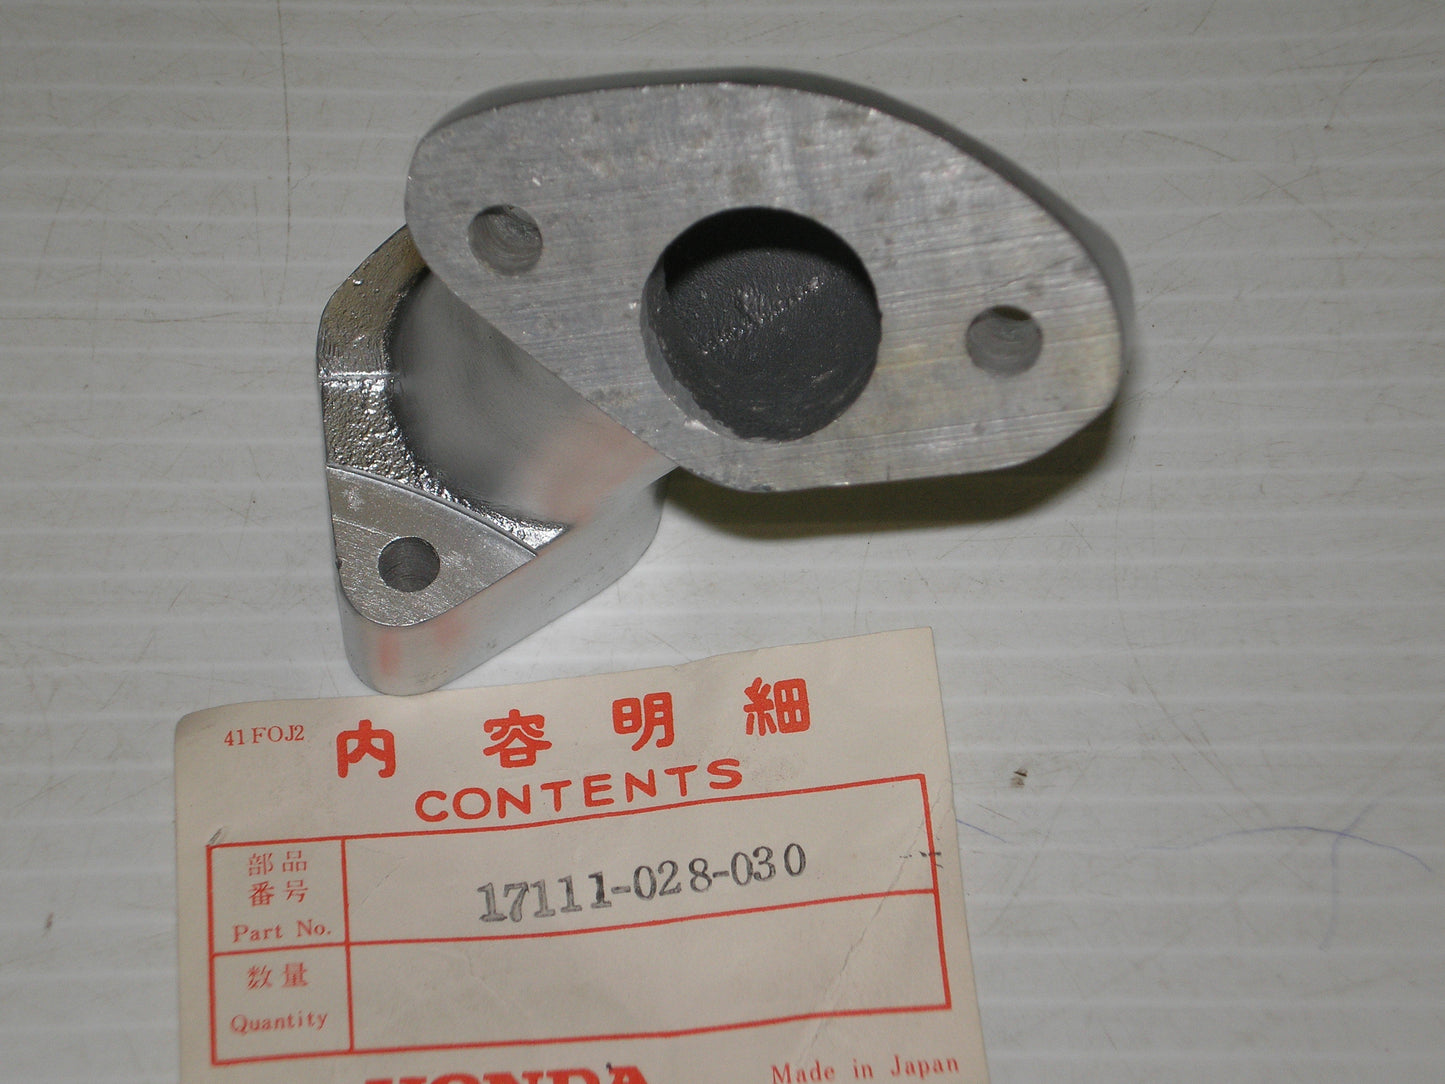 HONDA S90  Cylinder Head Inlet Pipe to Carburetor 17111-028-030